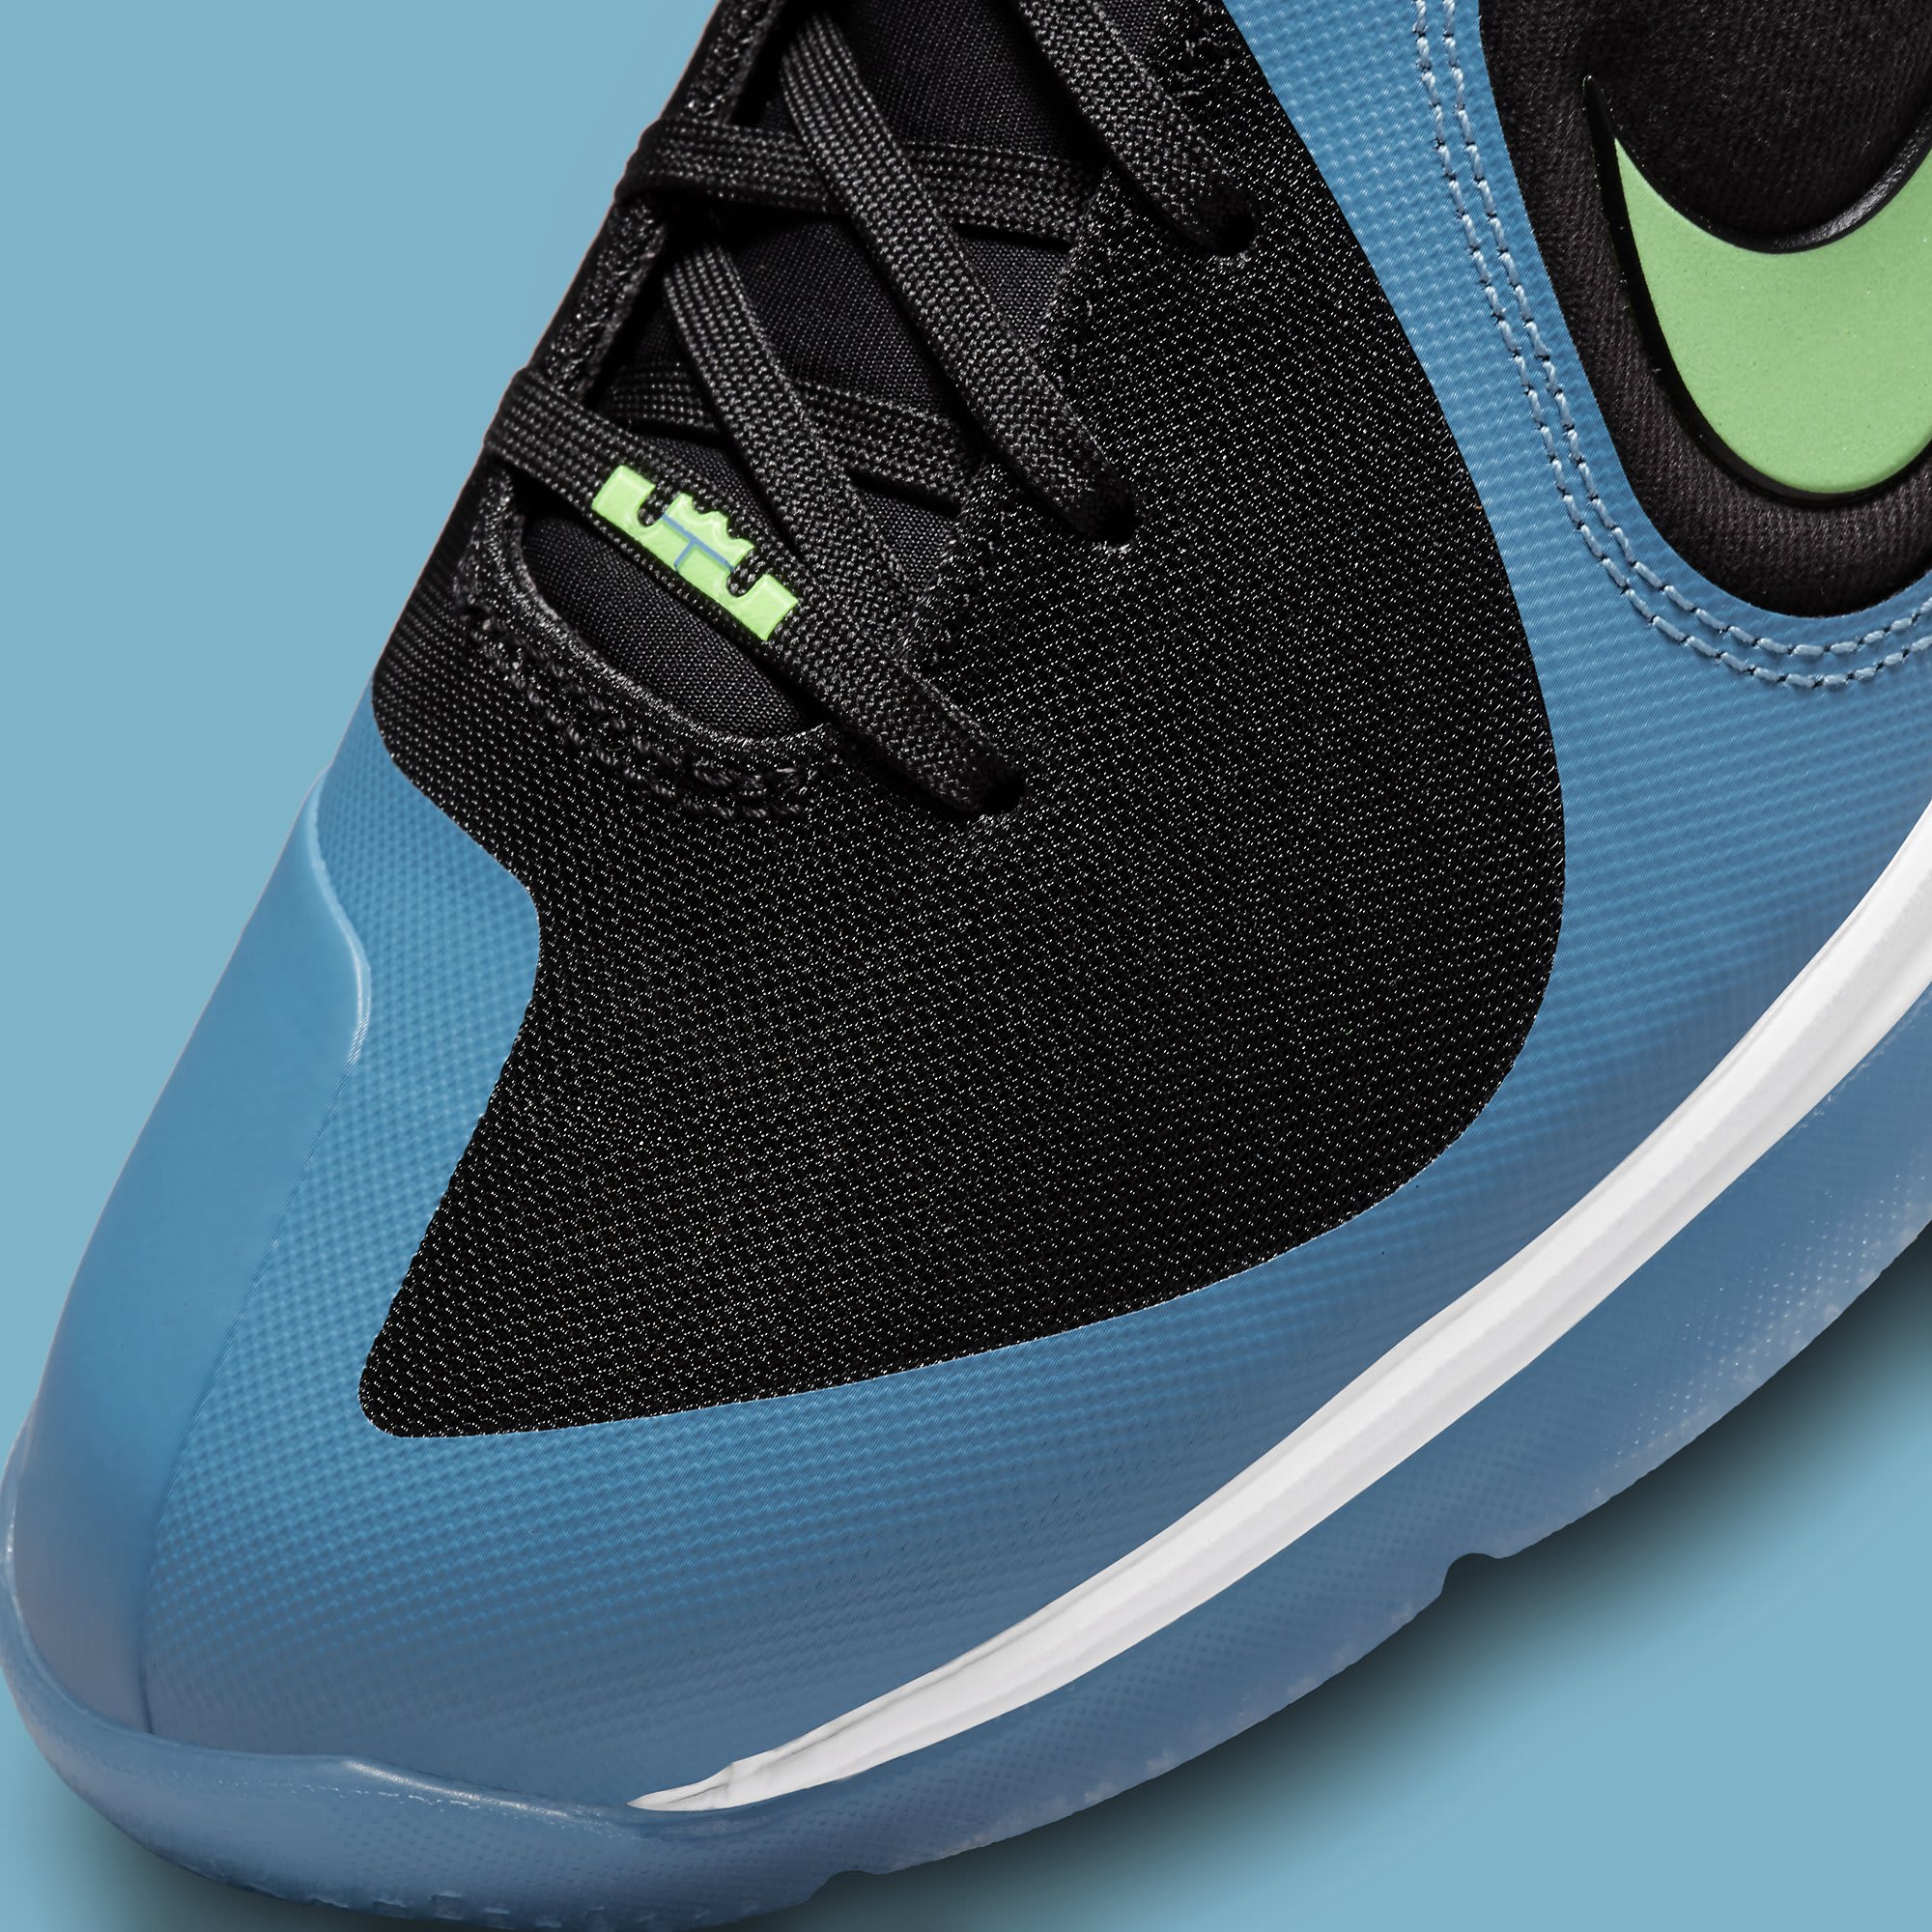 Nike LeBron 9 IX South Coast DO5838-001 Release Date